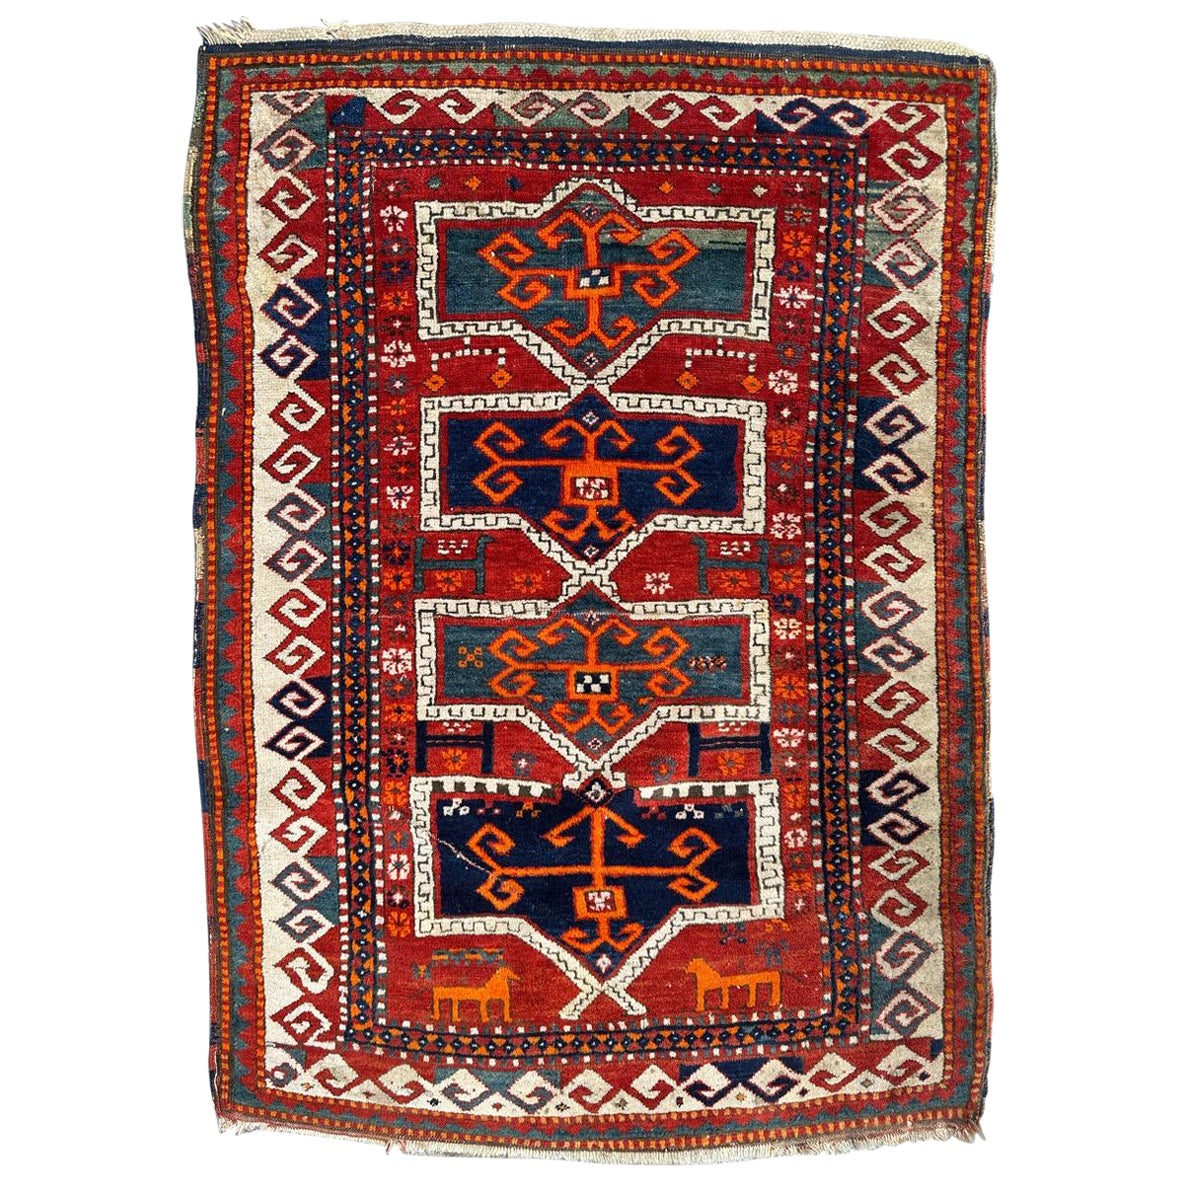 Joli tapis kazakh du début du 20e siècle de Bobyrug 